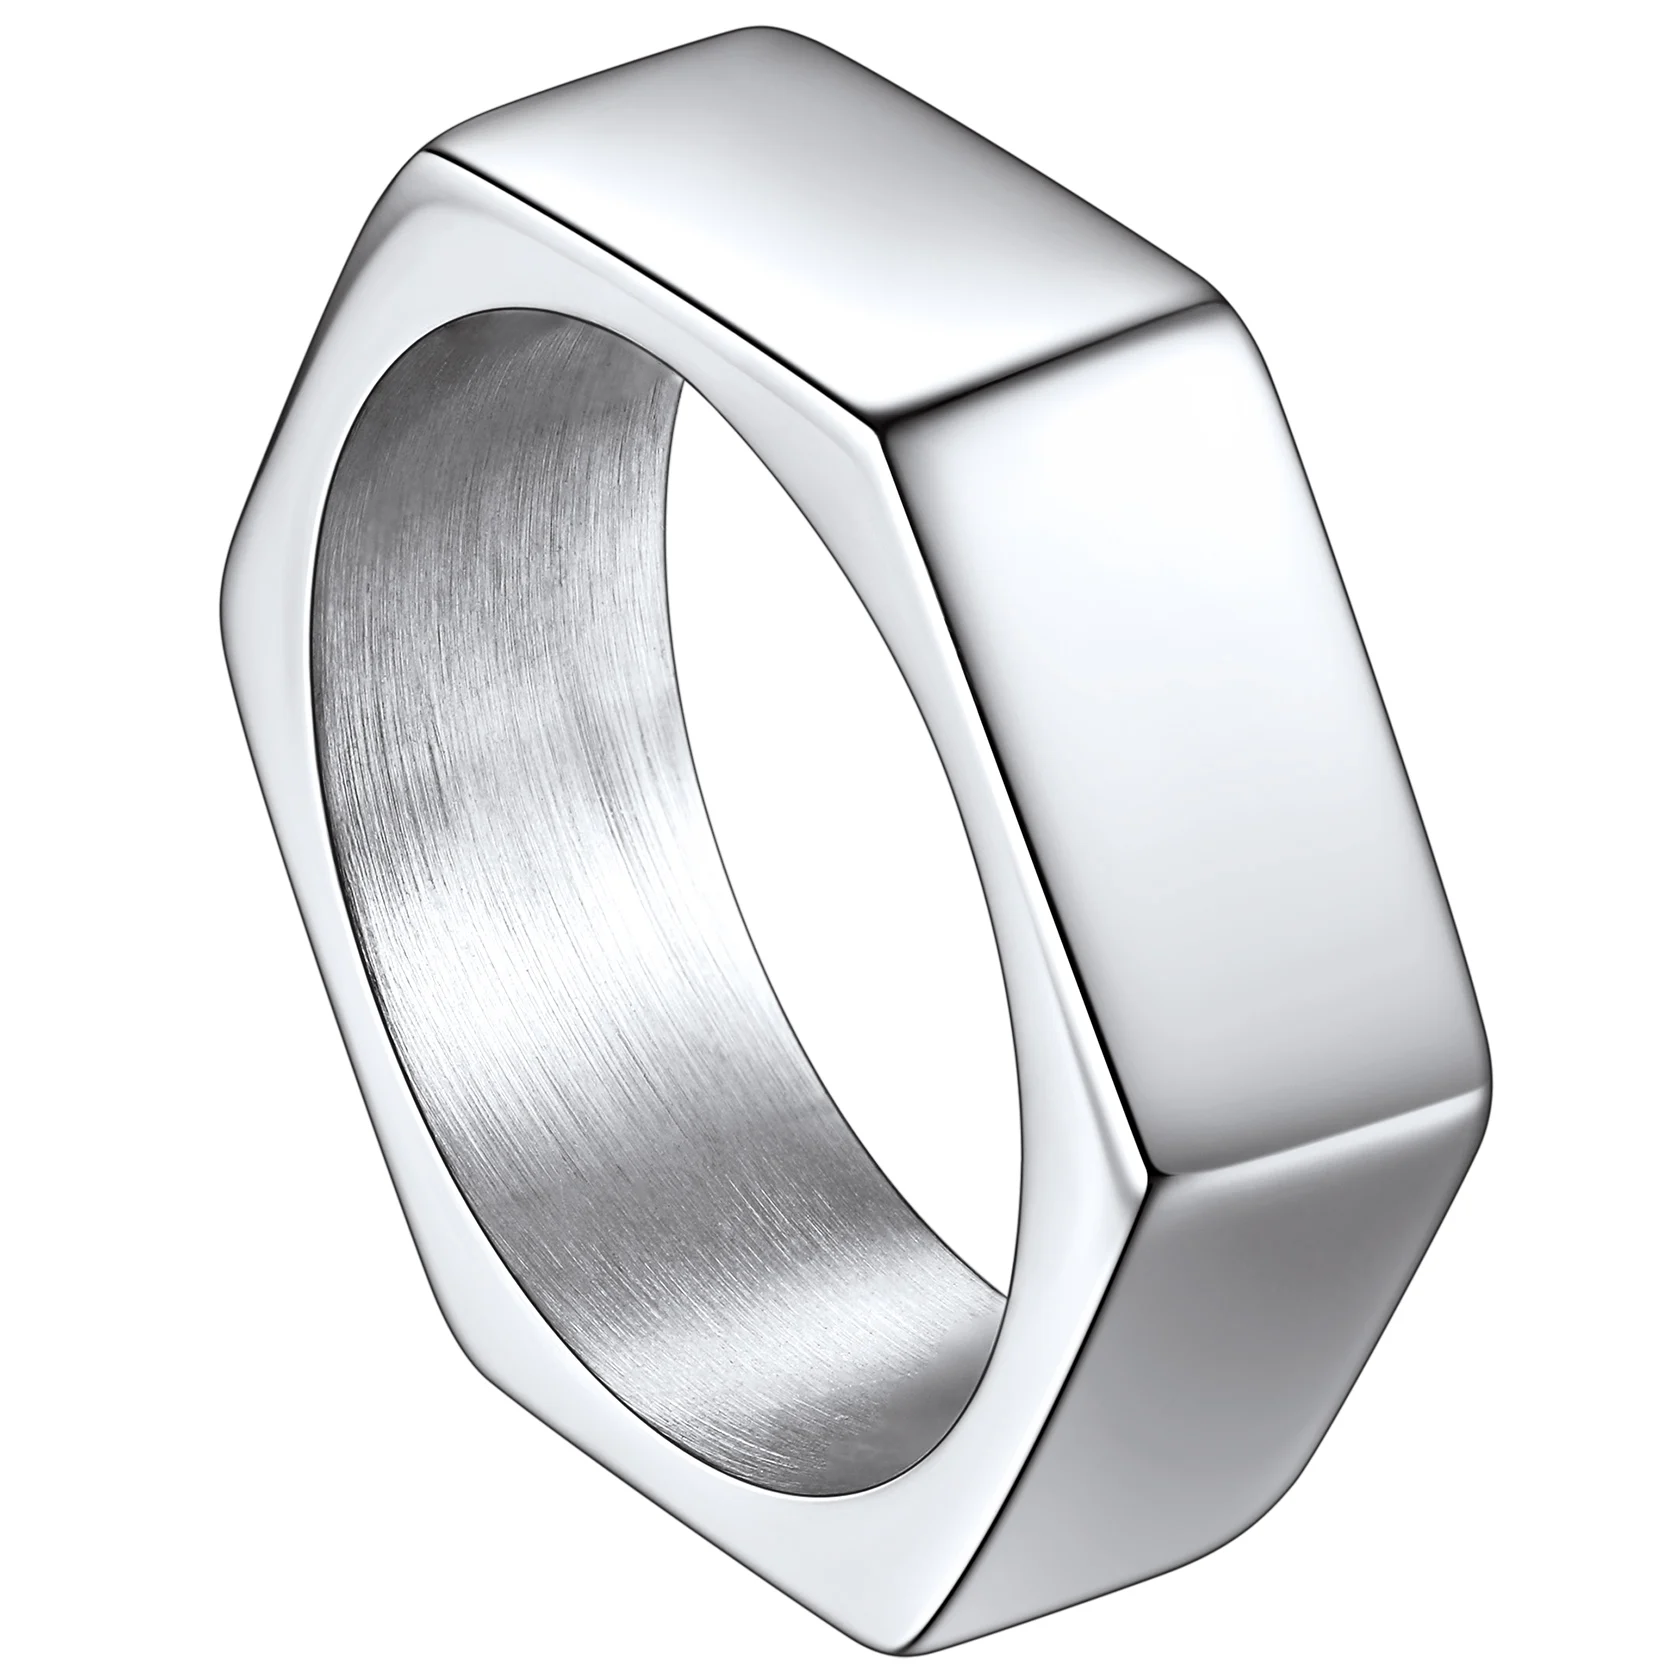 

ChainsPro Men and Women Screw Ring, 18K Gold-plated Stainless Steel Jewelry Hexagonal Geometric Norwegian Viking Symbol Ring